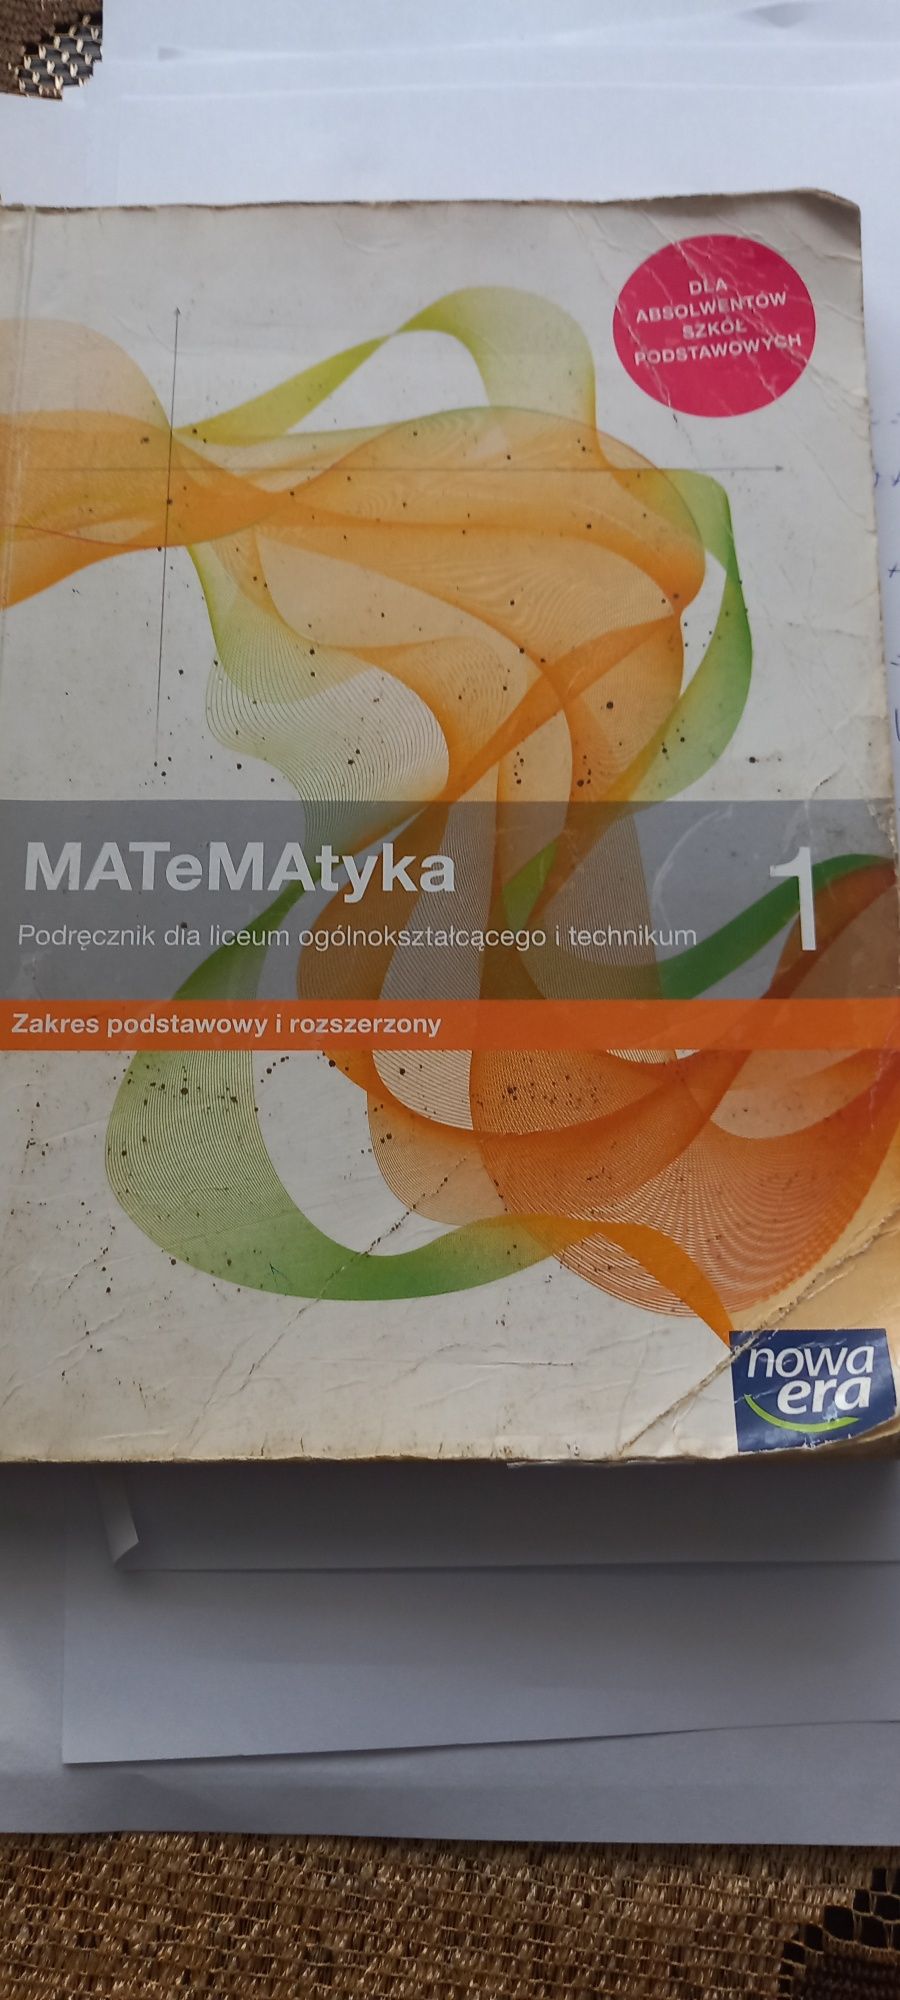 Książka matematyka